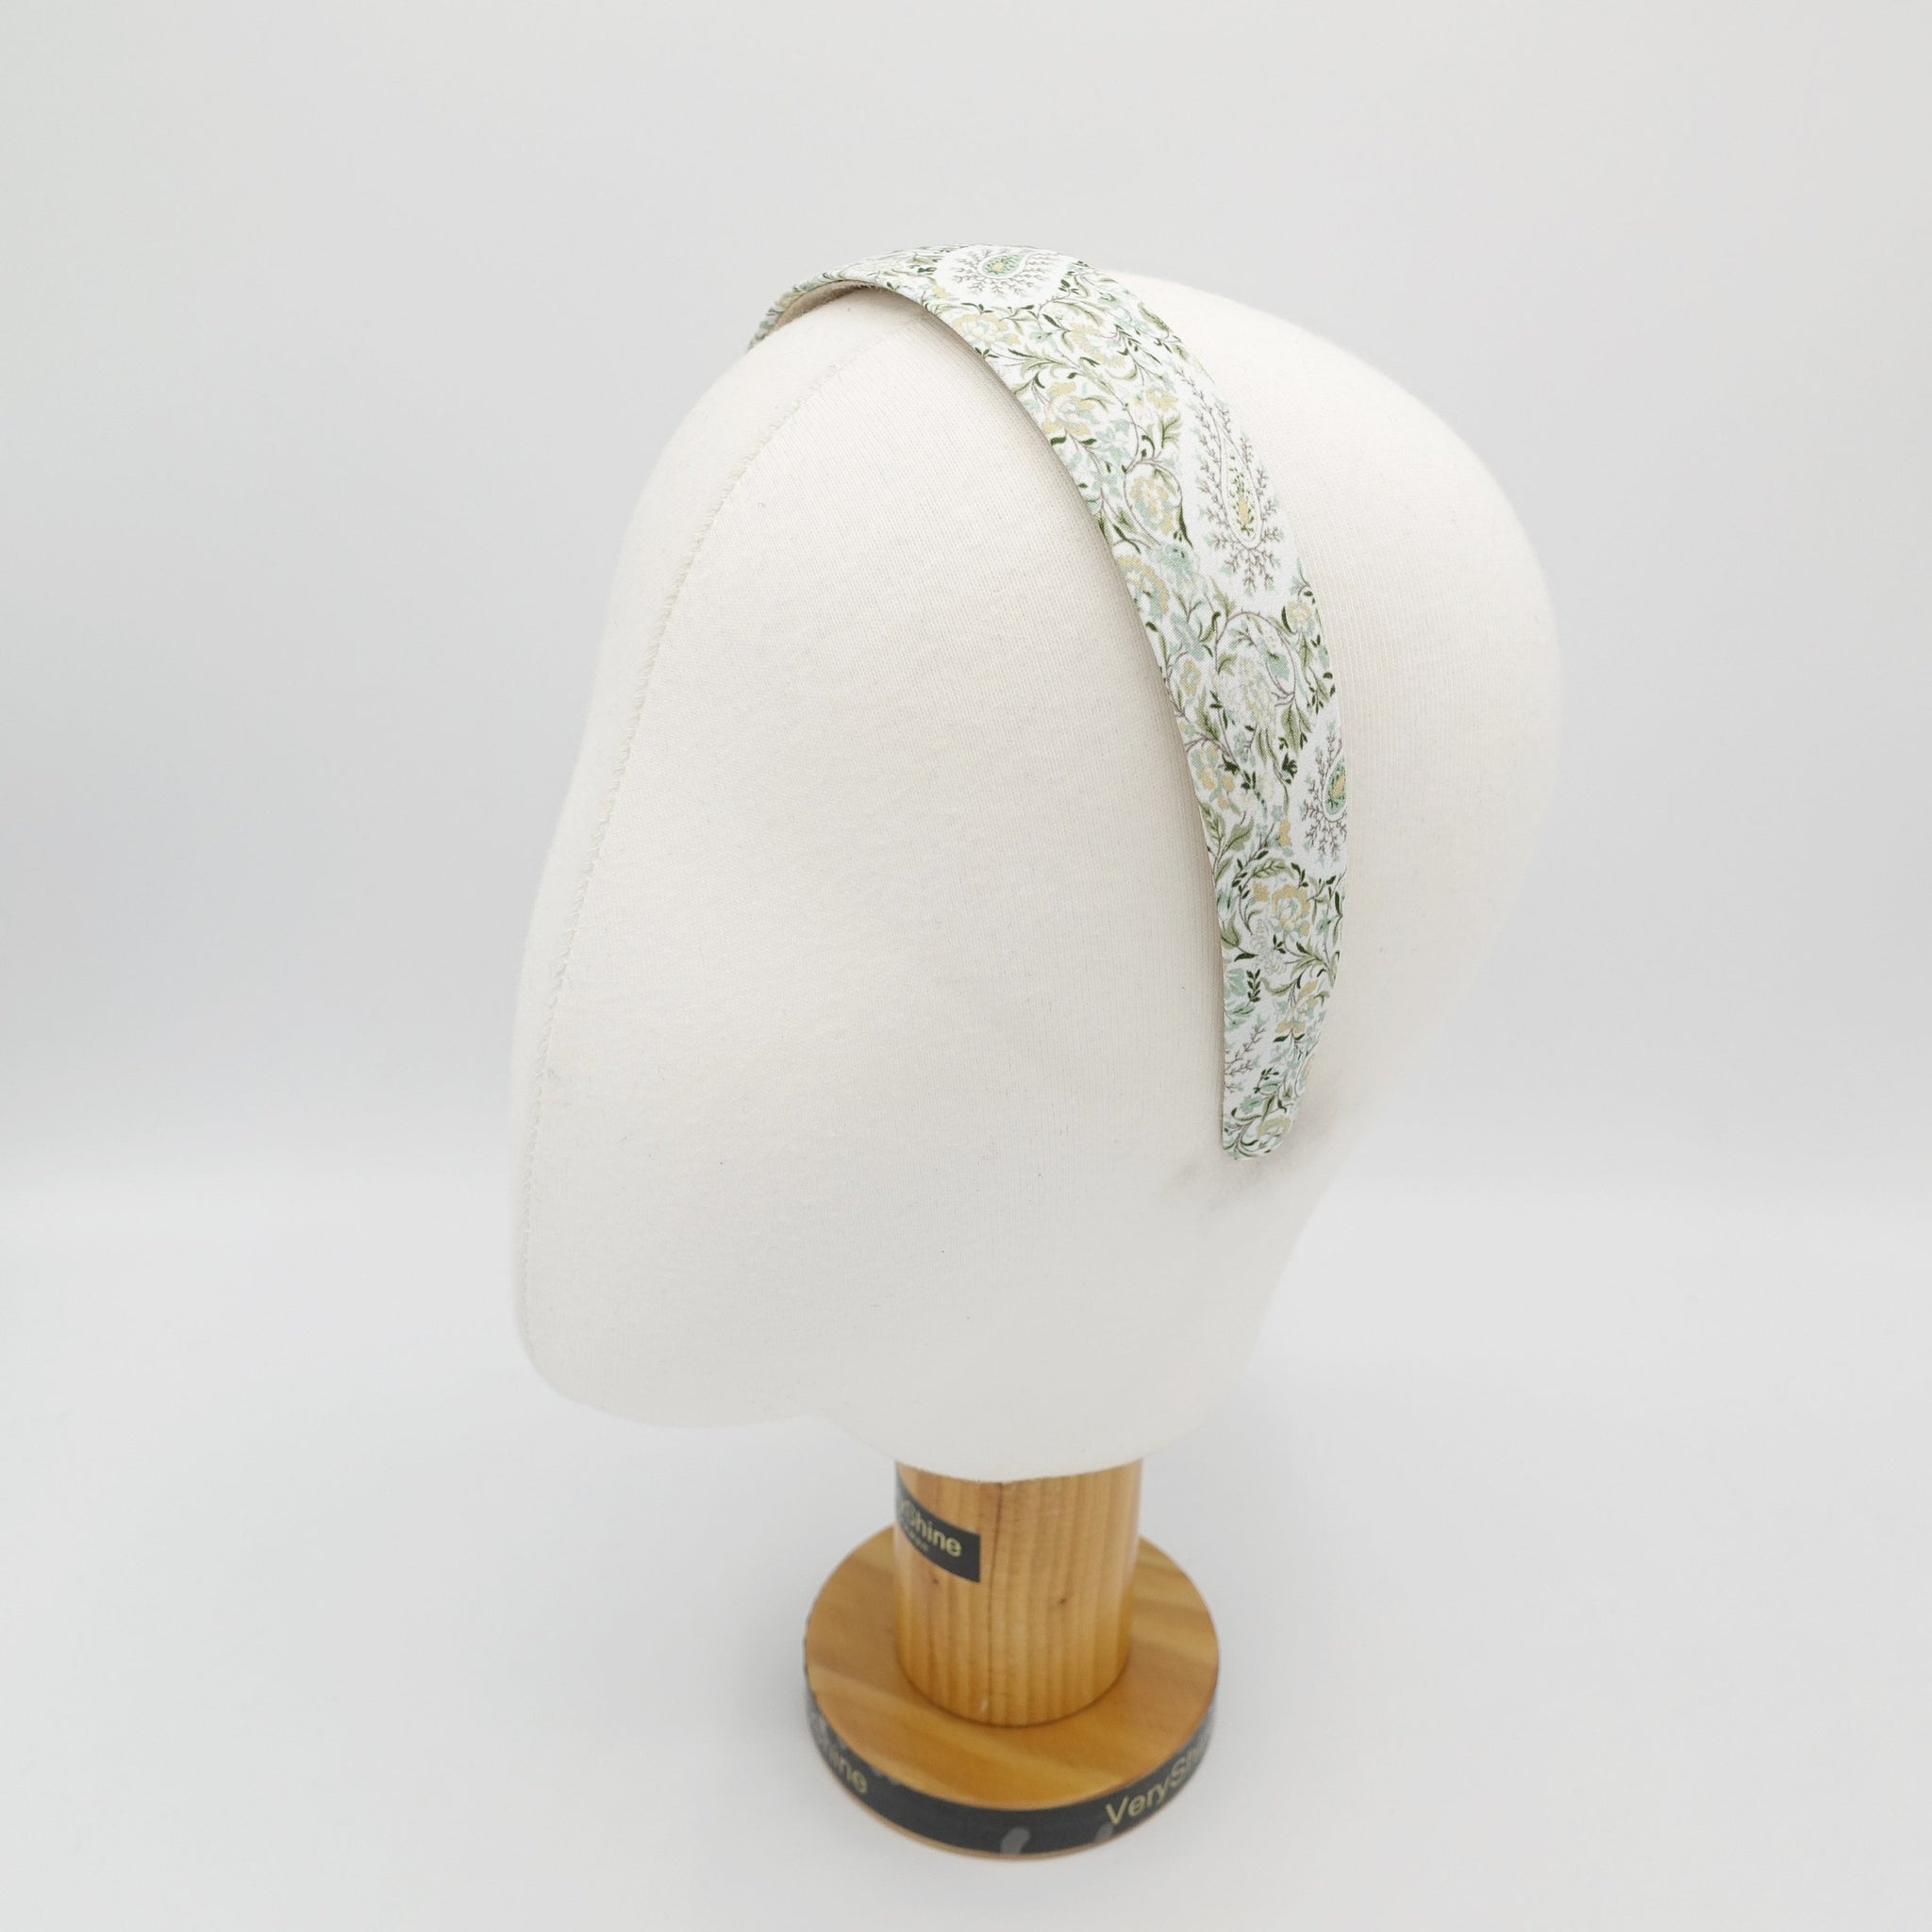 VeryShine Headband paisley headband floral print basic hairband for women